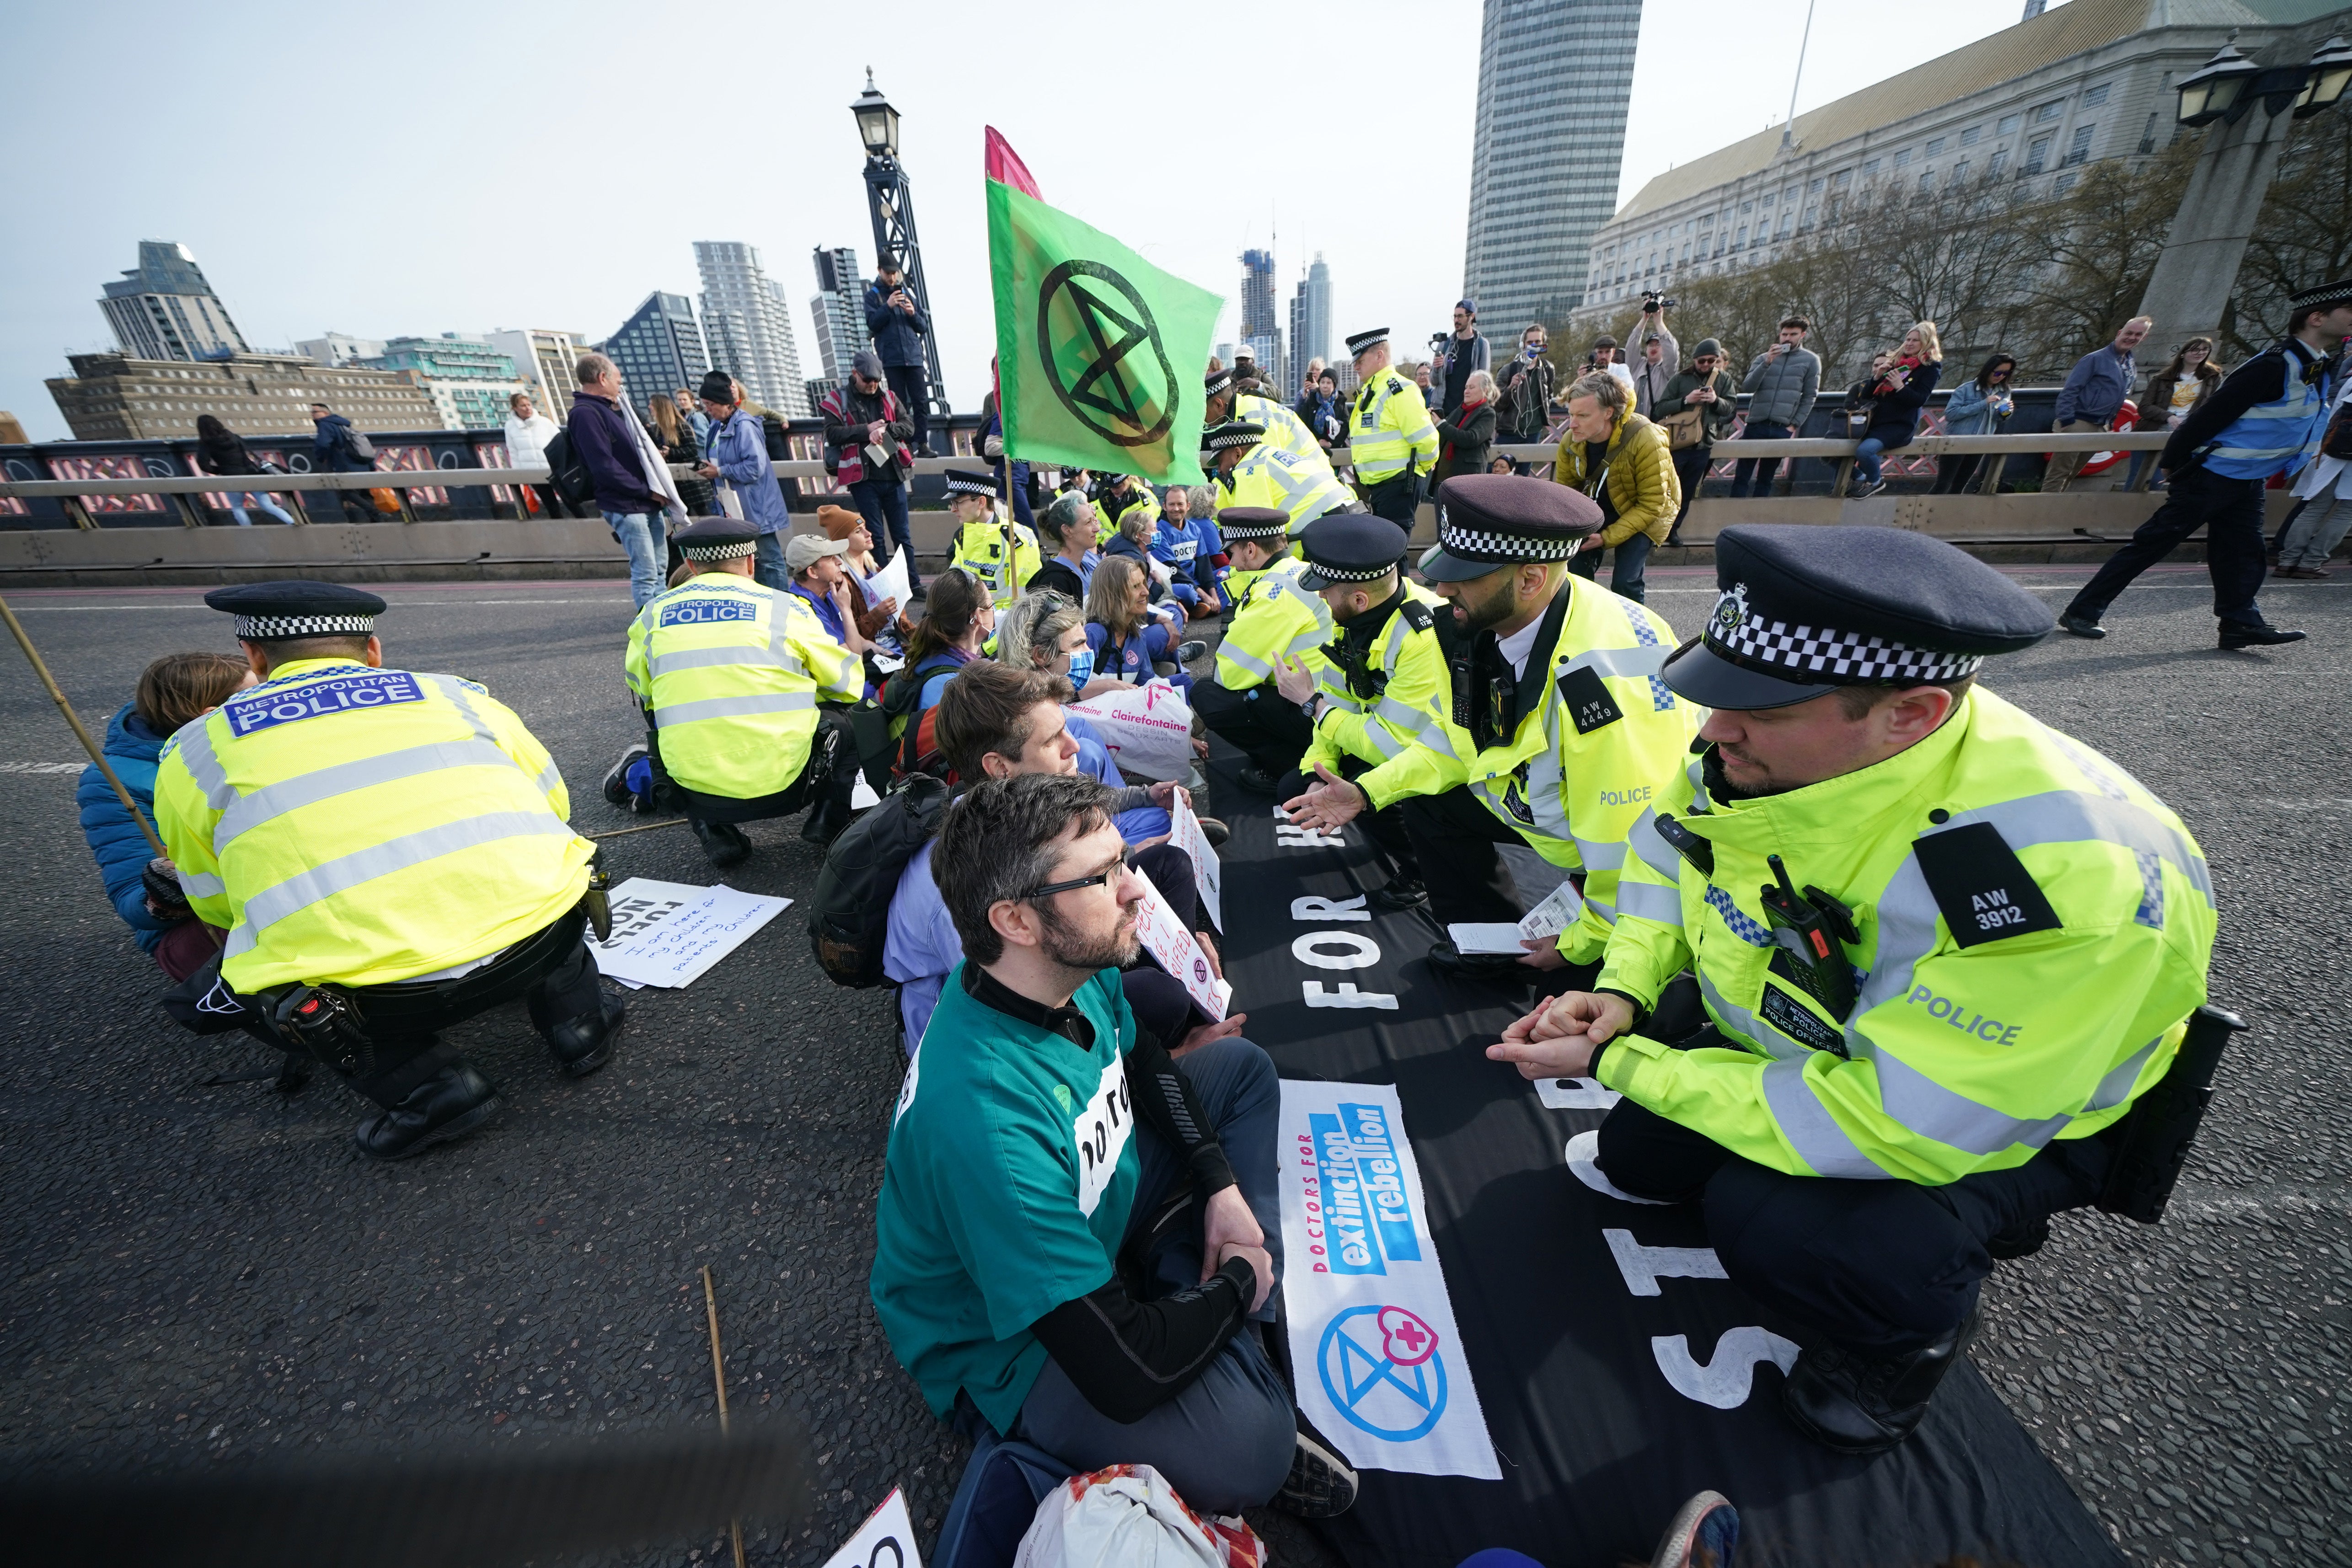 Police talk to protestors taking part in a demonstration on Lambeth Bridge in central London (Yui Mok/PA)